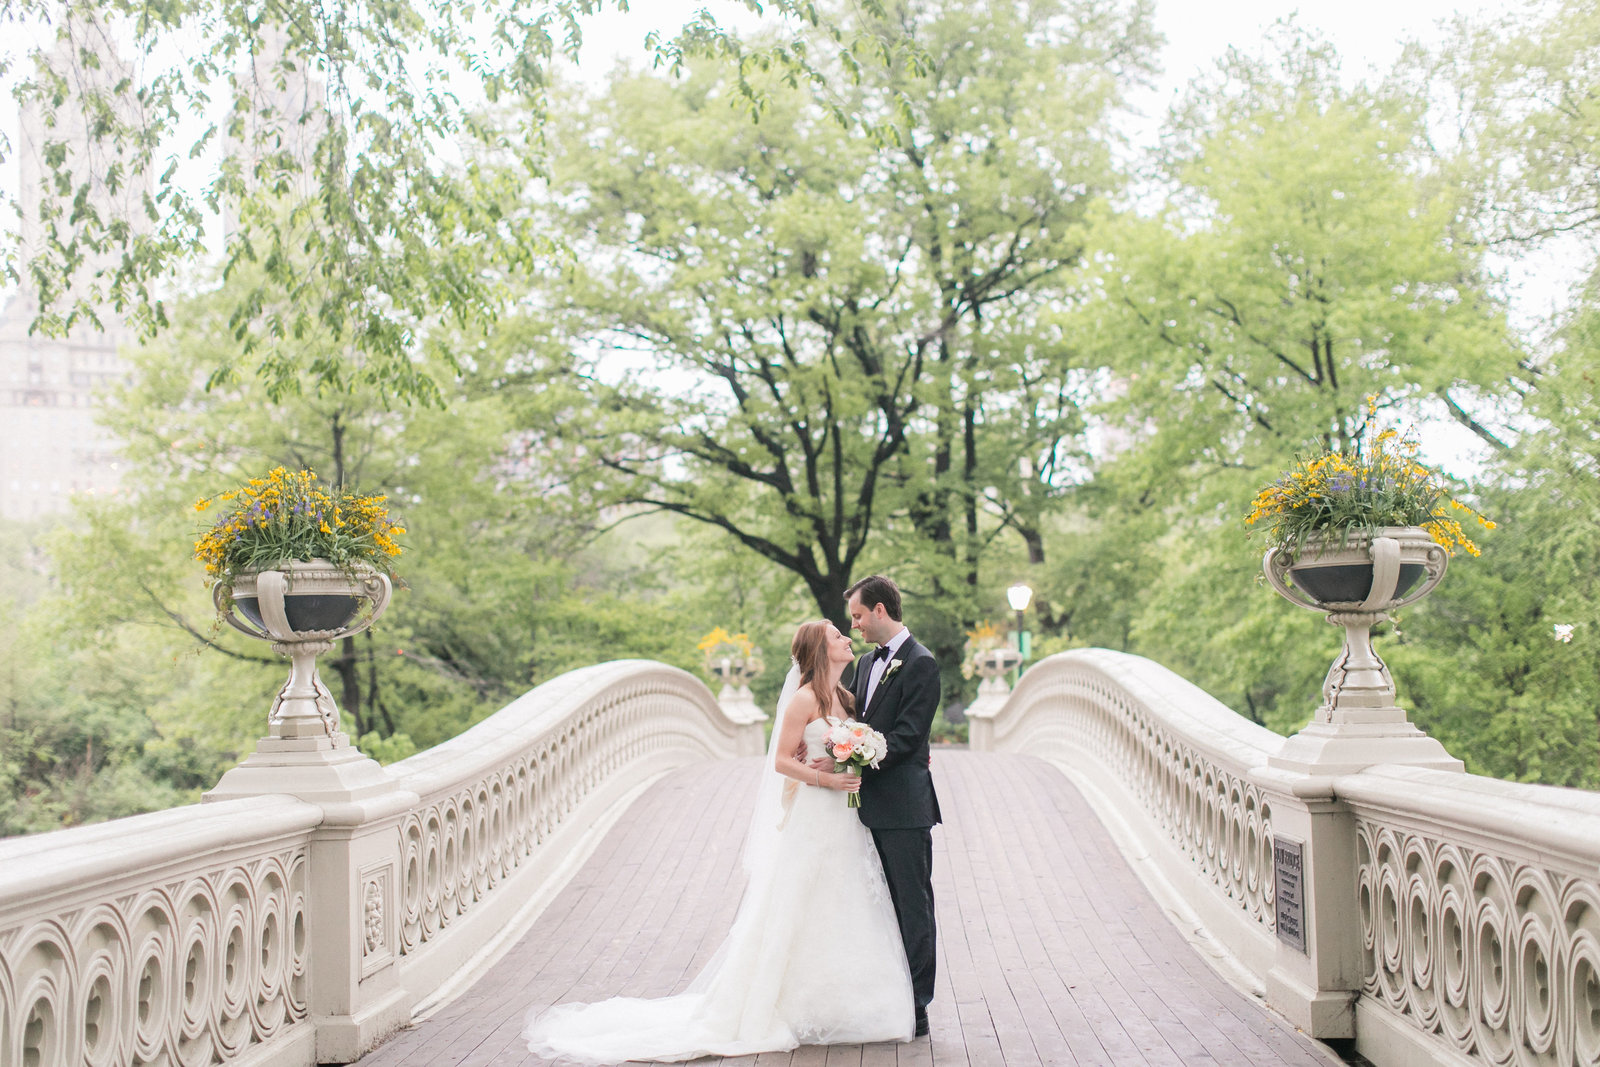 A NYC PLAZA WEDDING : CHARLIE + JAMES - Amy Rizzuto Photography